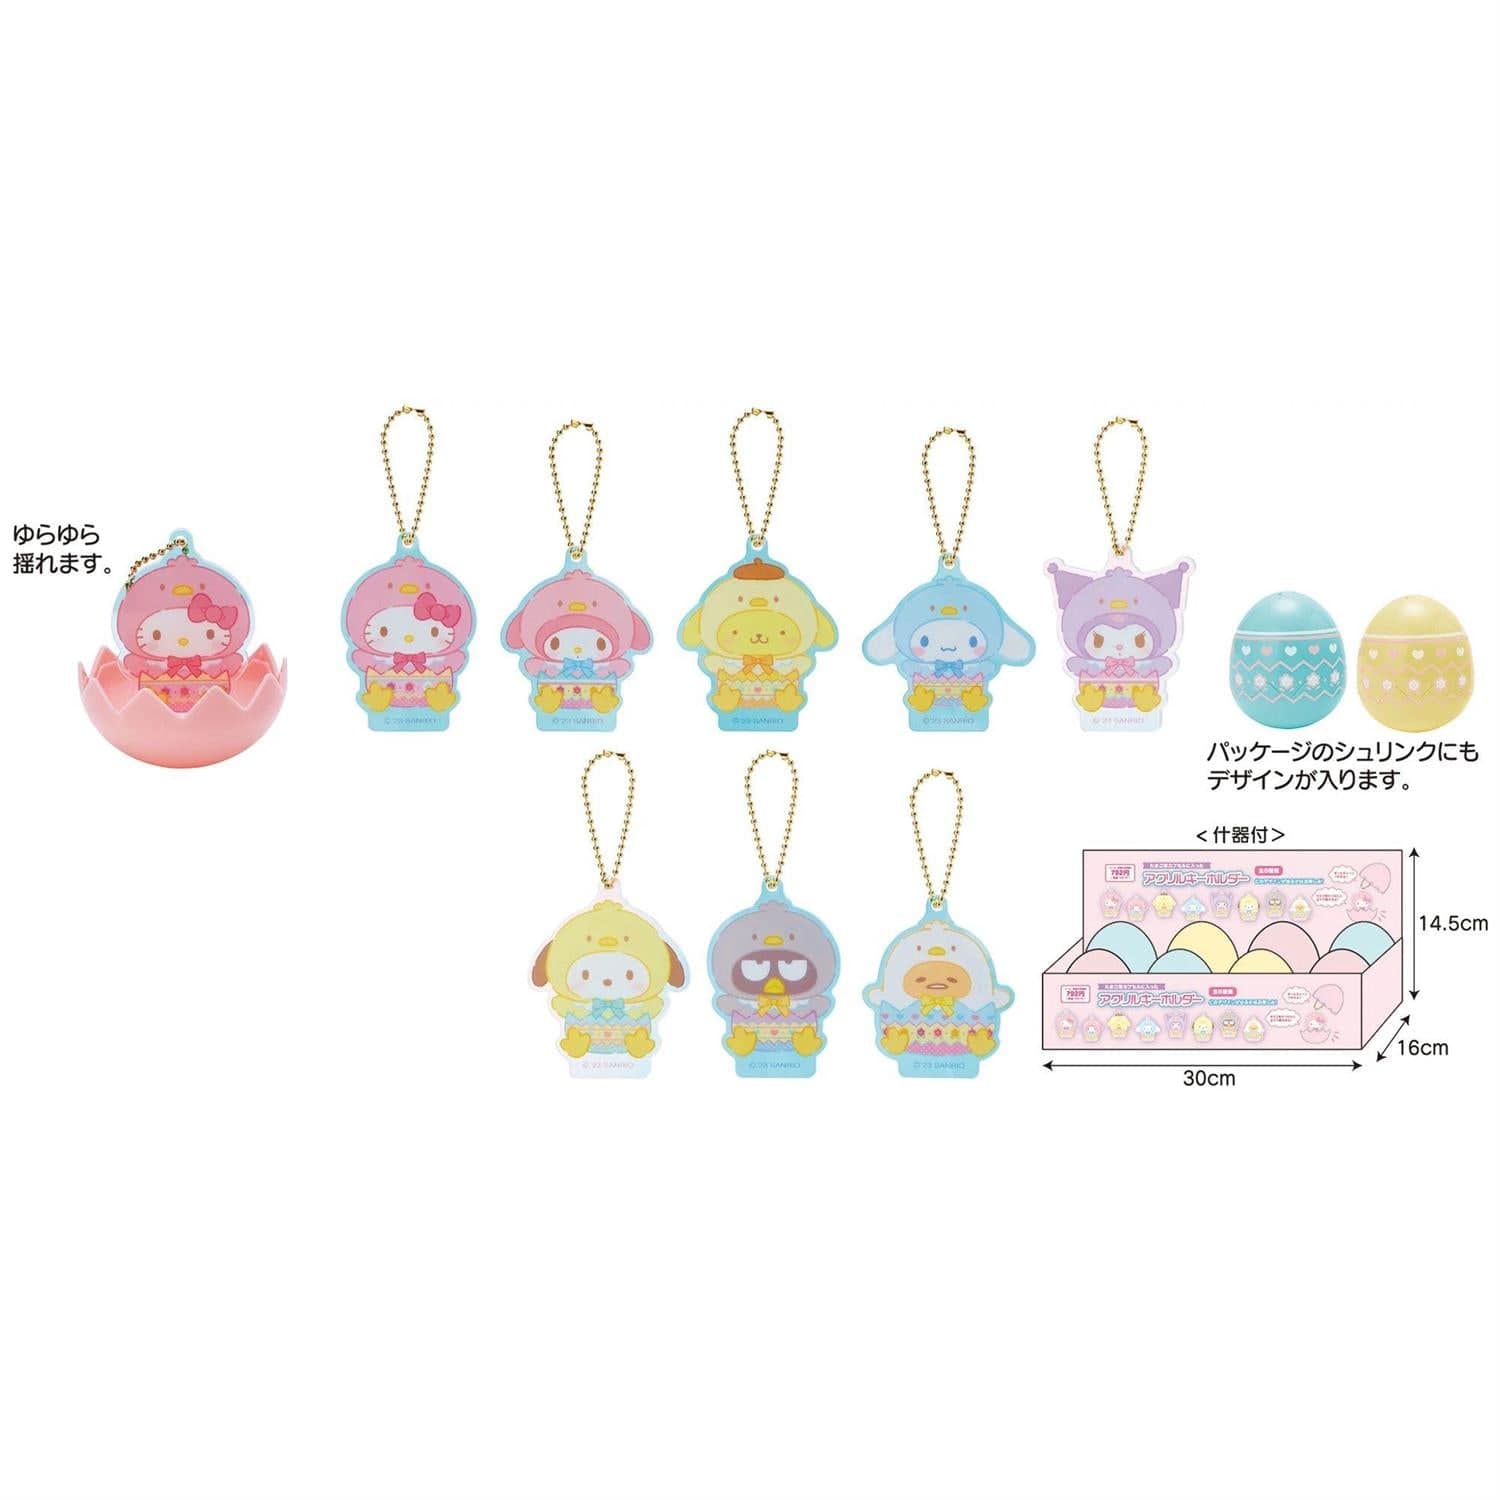 Enesco Sanrio Secret Keychain Surprise Gachapon Capsule Kawaii Gifts 4550337368770